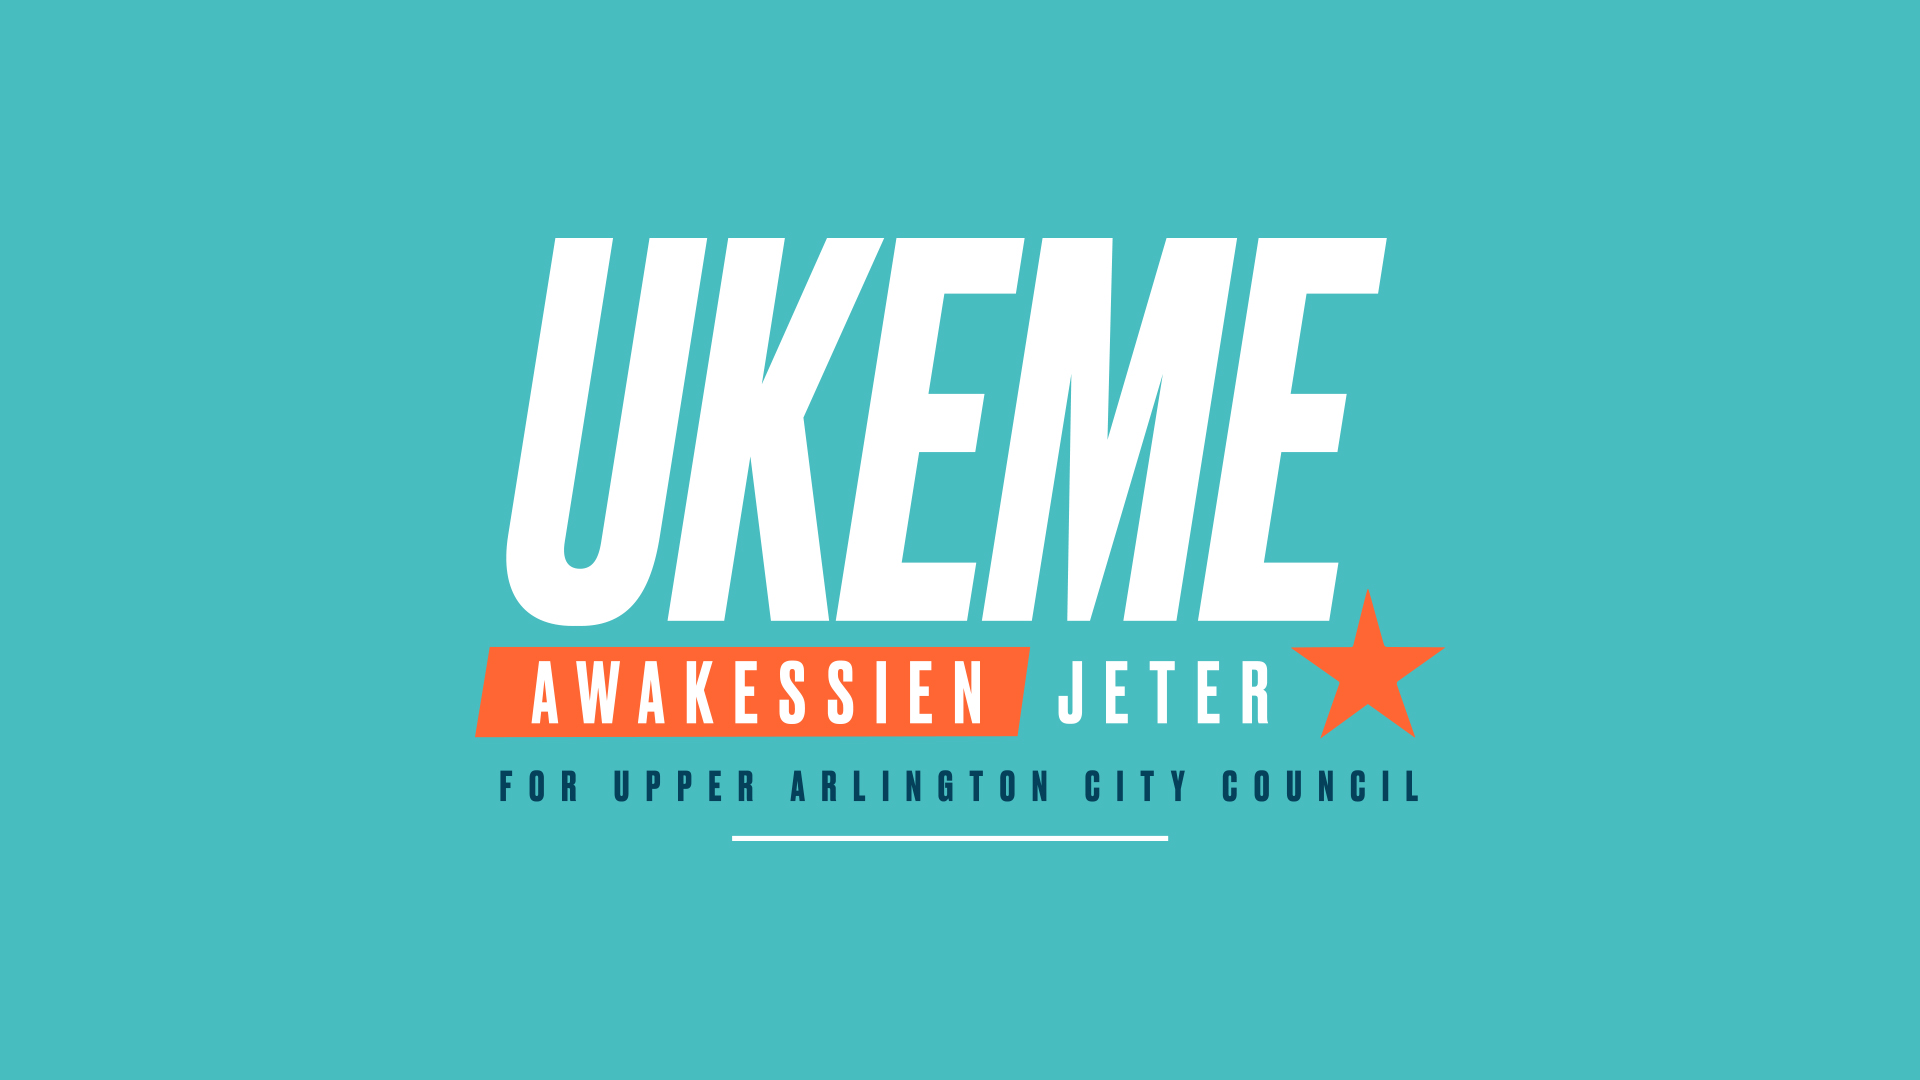 Friends to Elect Ukeme Awakessien Jeter logo